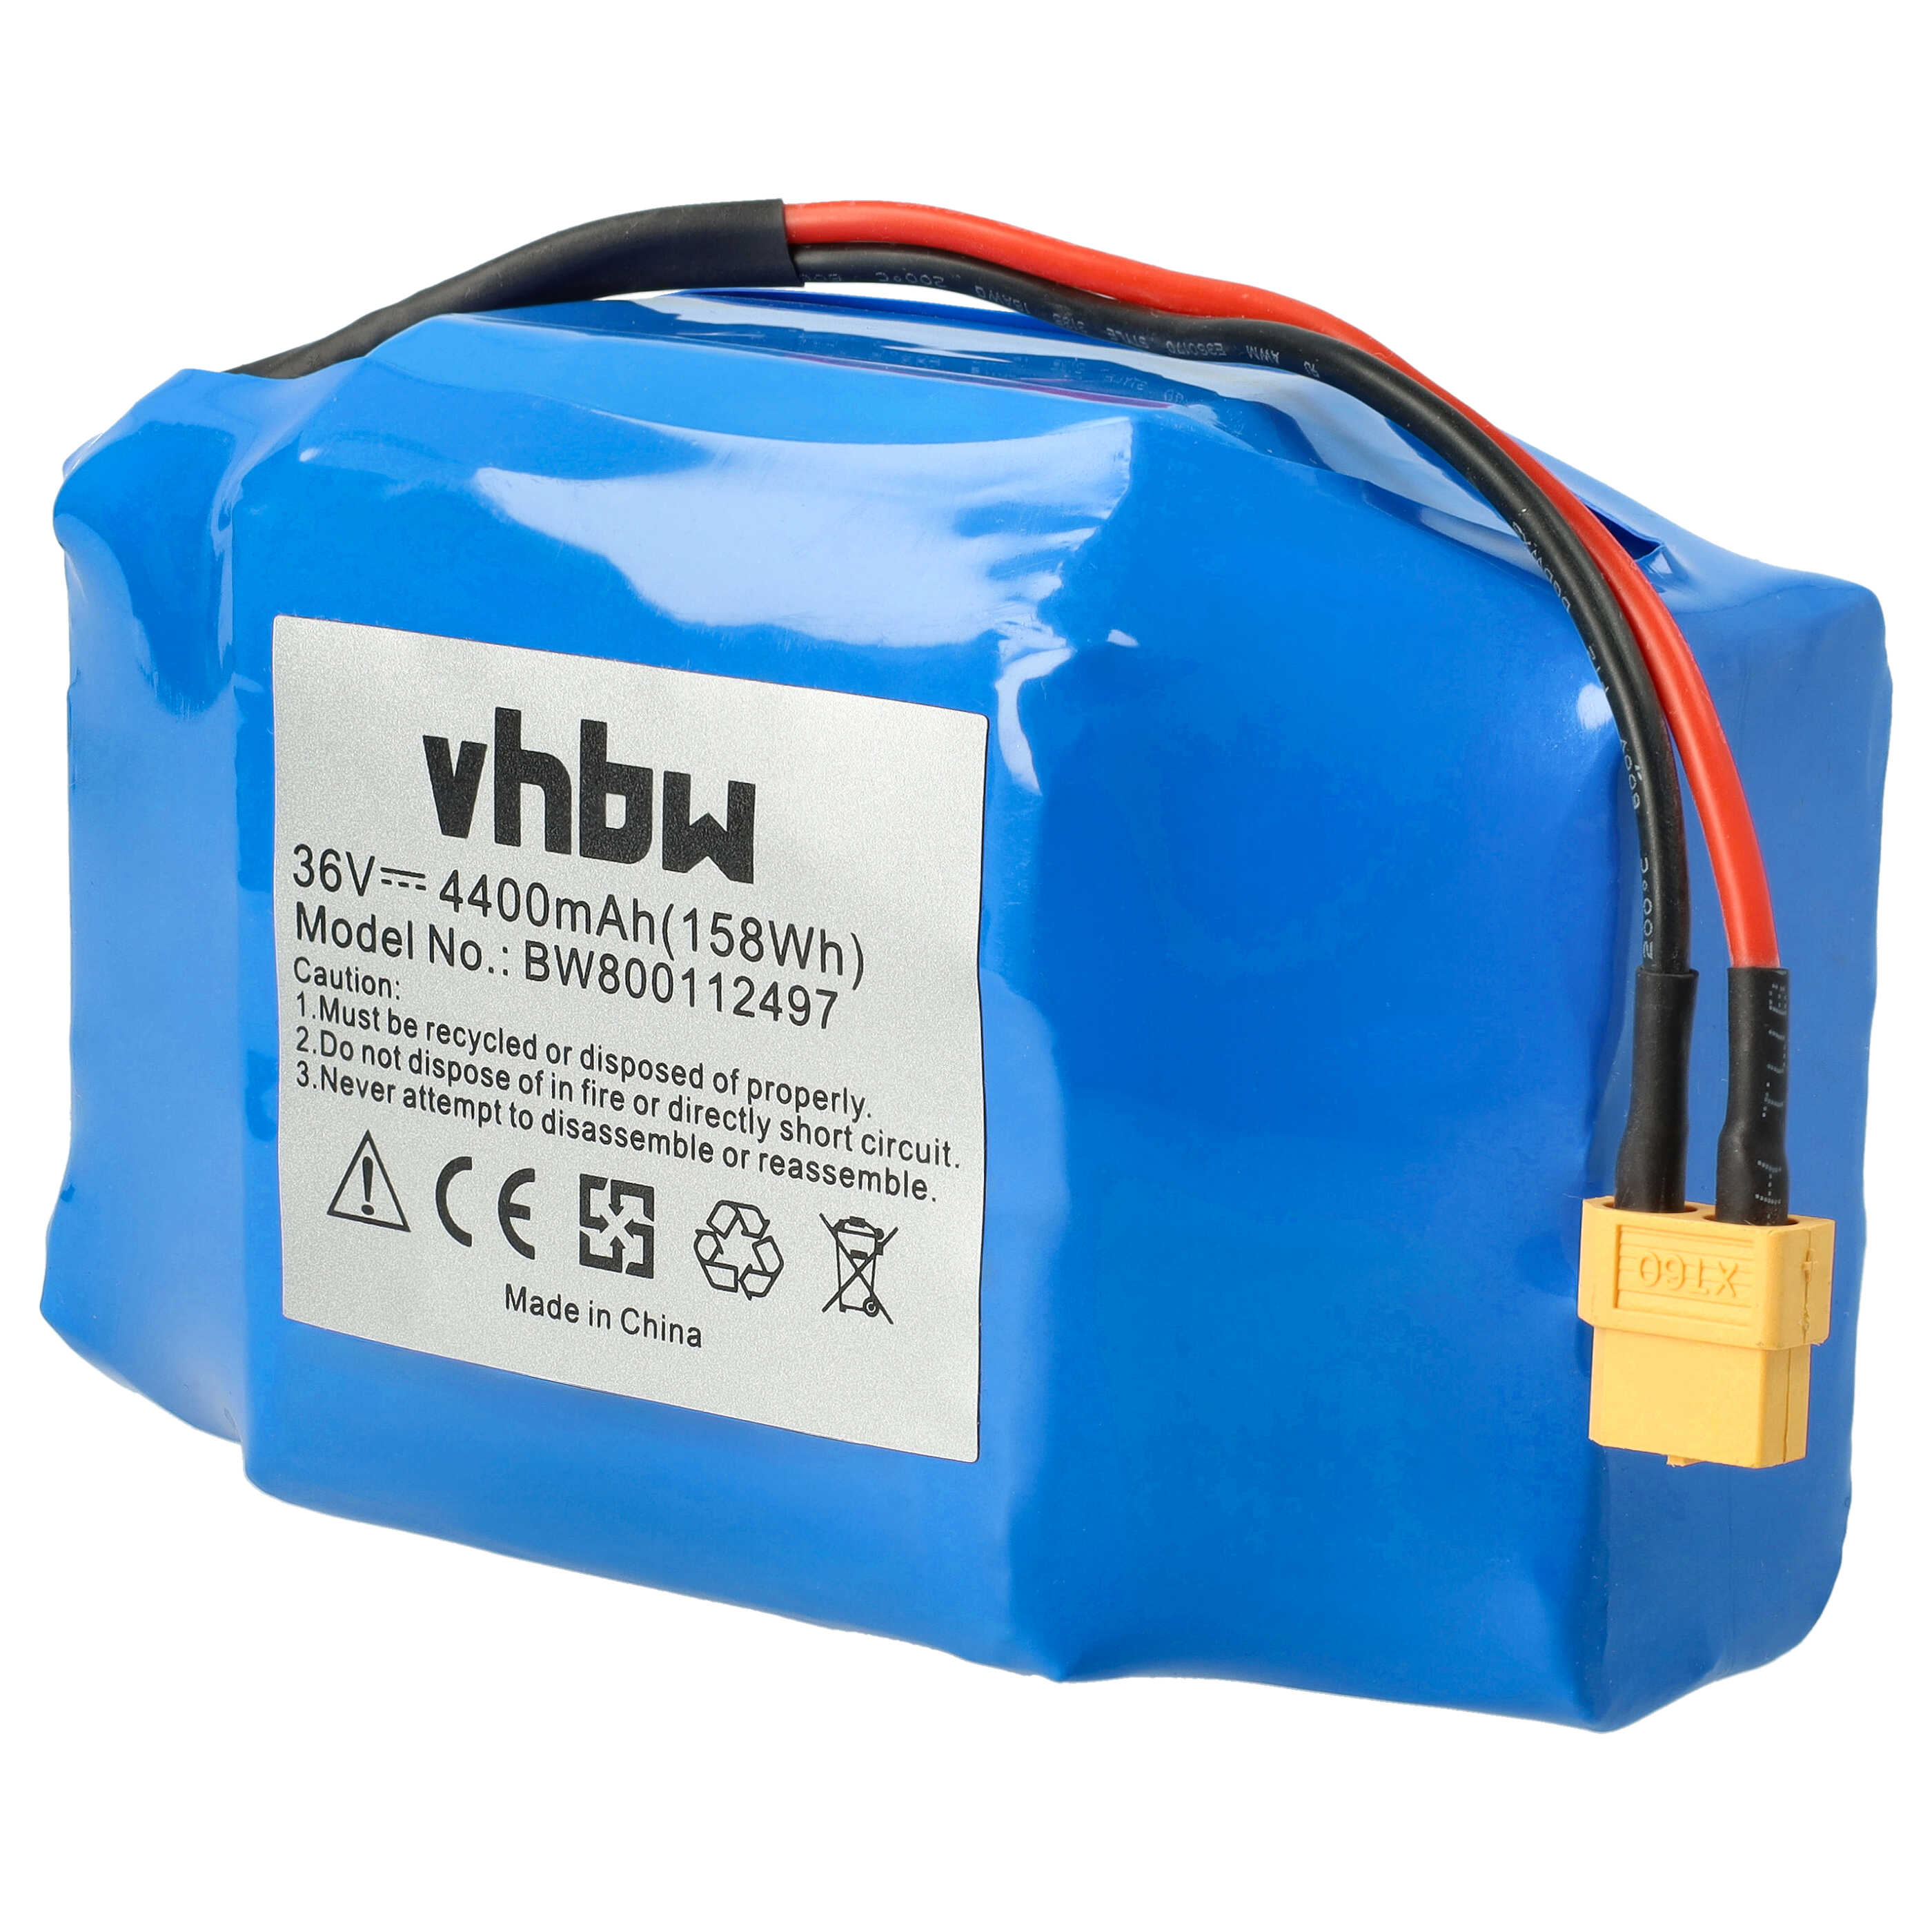 E-Board Battery Replacement for Bluewheel 10IXR19/65-2, HPK-11 - 4400mAh 36V Li-Ion